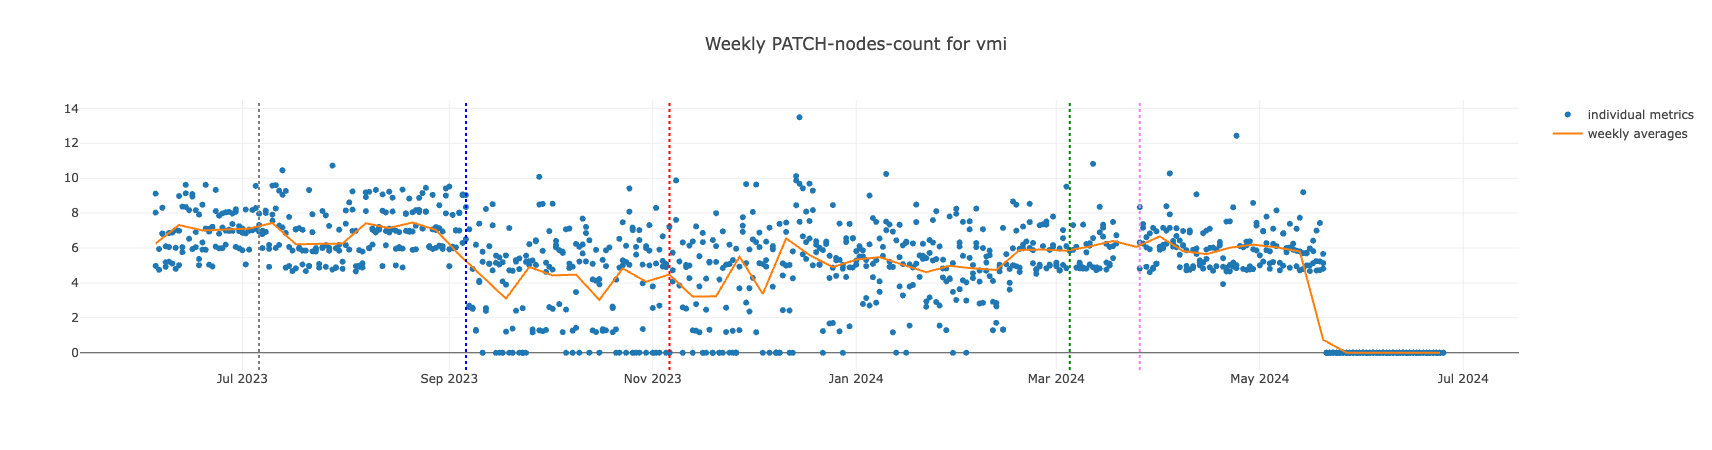 vmi-patch-nodes-count.png